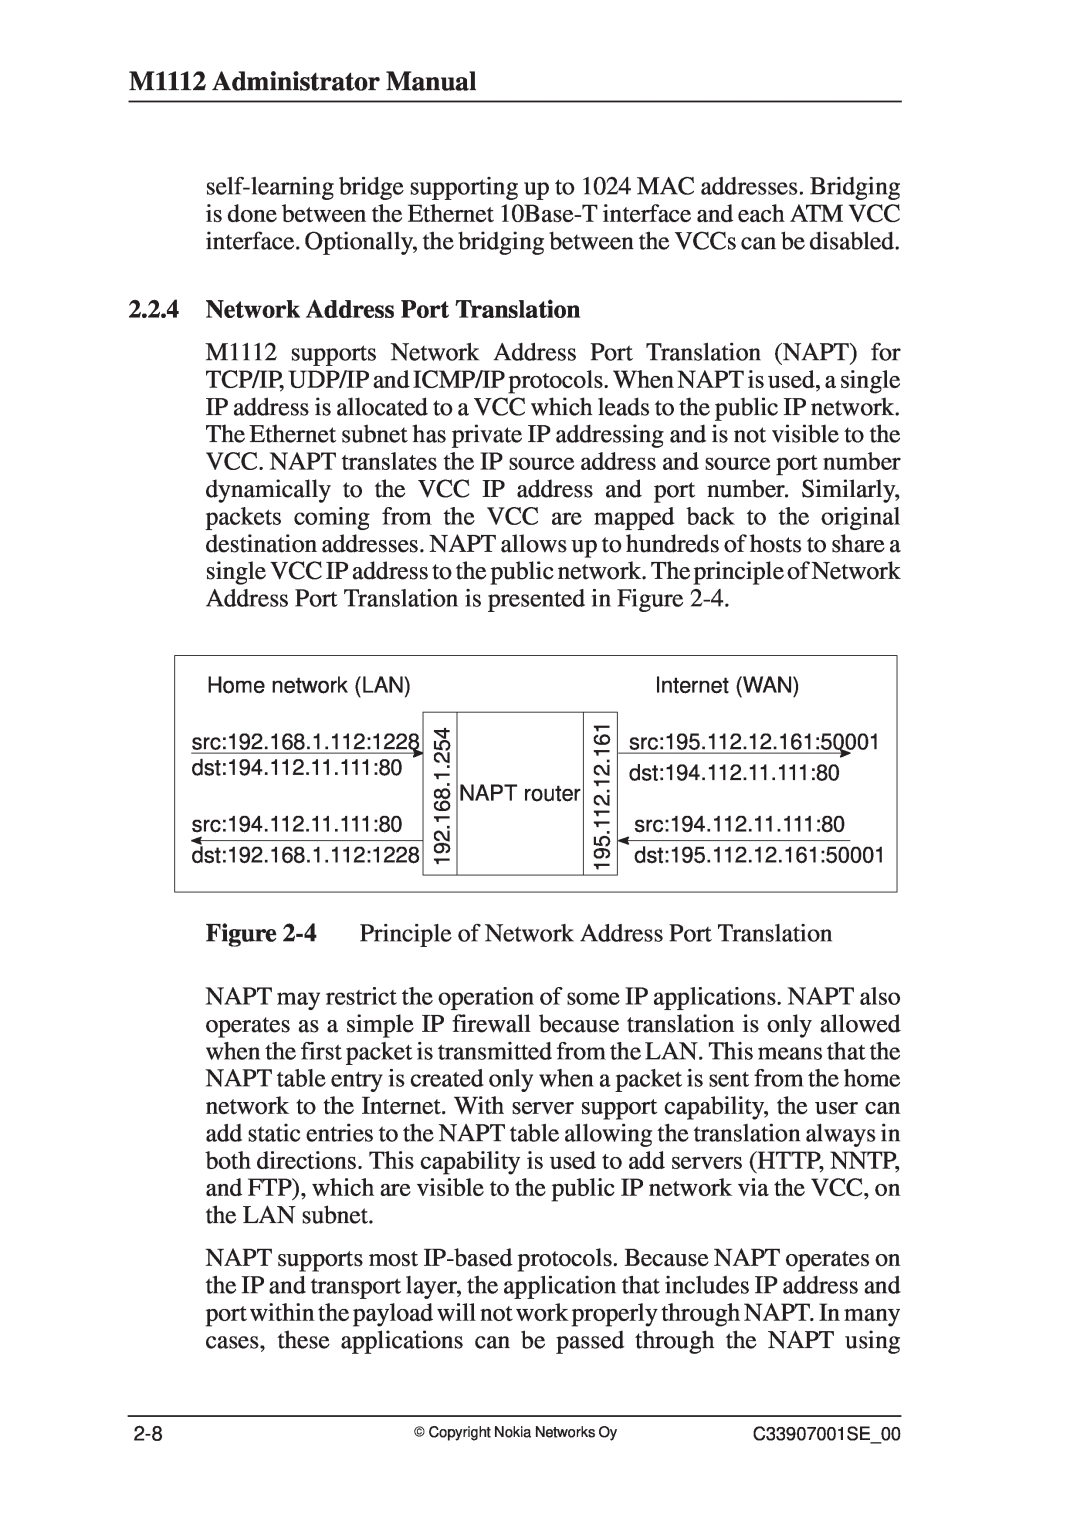 Nokia manual M1112 Administrator Manual, Network Address Port Translation 